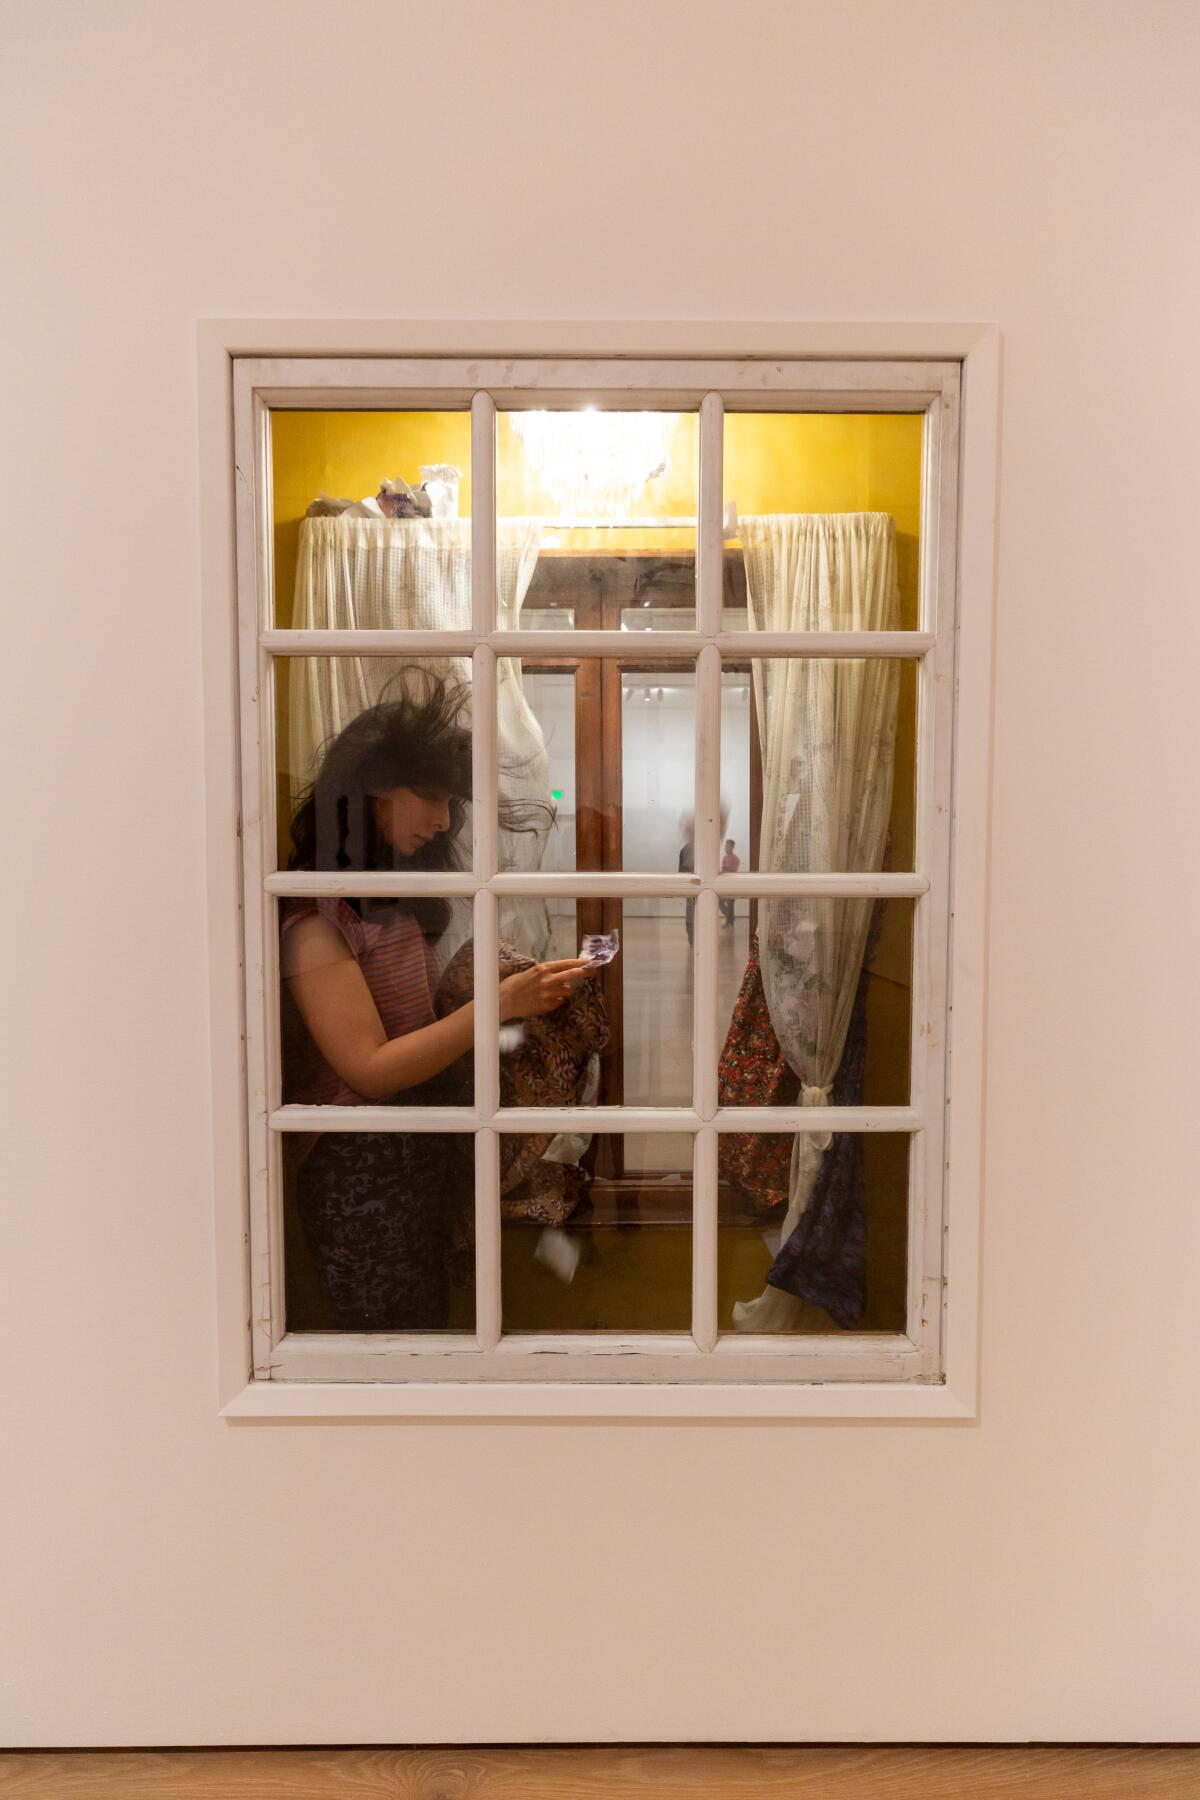 Roksana Pirouzmand, "Between Two Windows." 